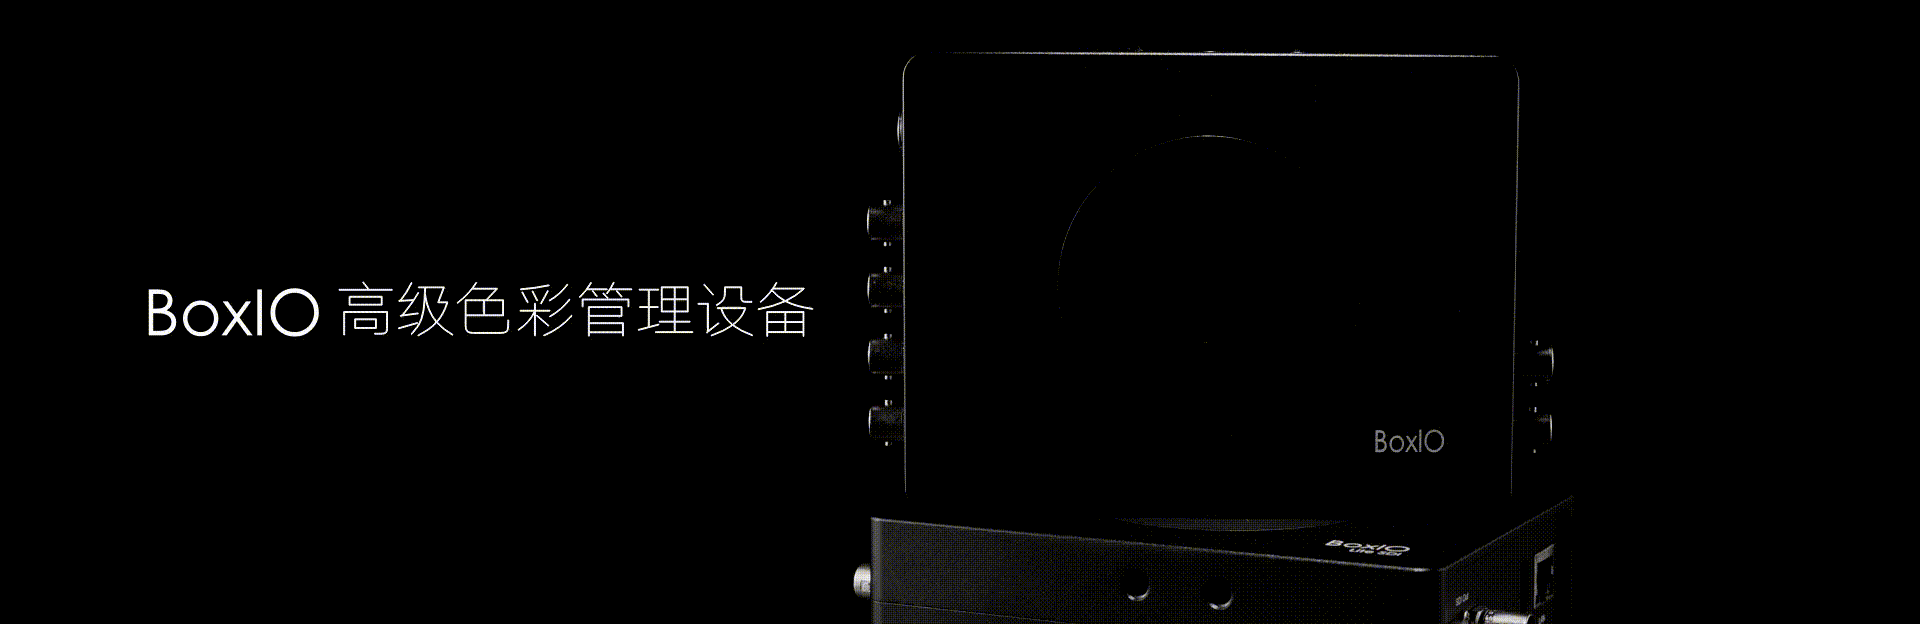 BoxIO-02-加字幕